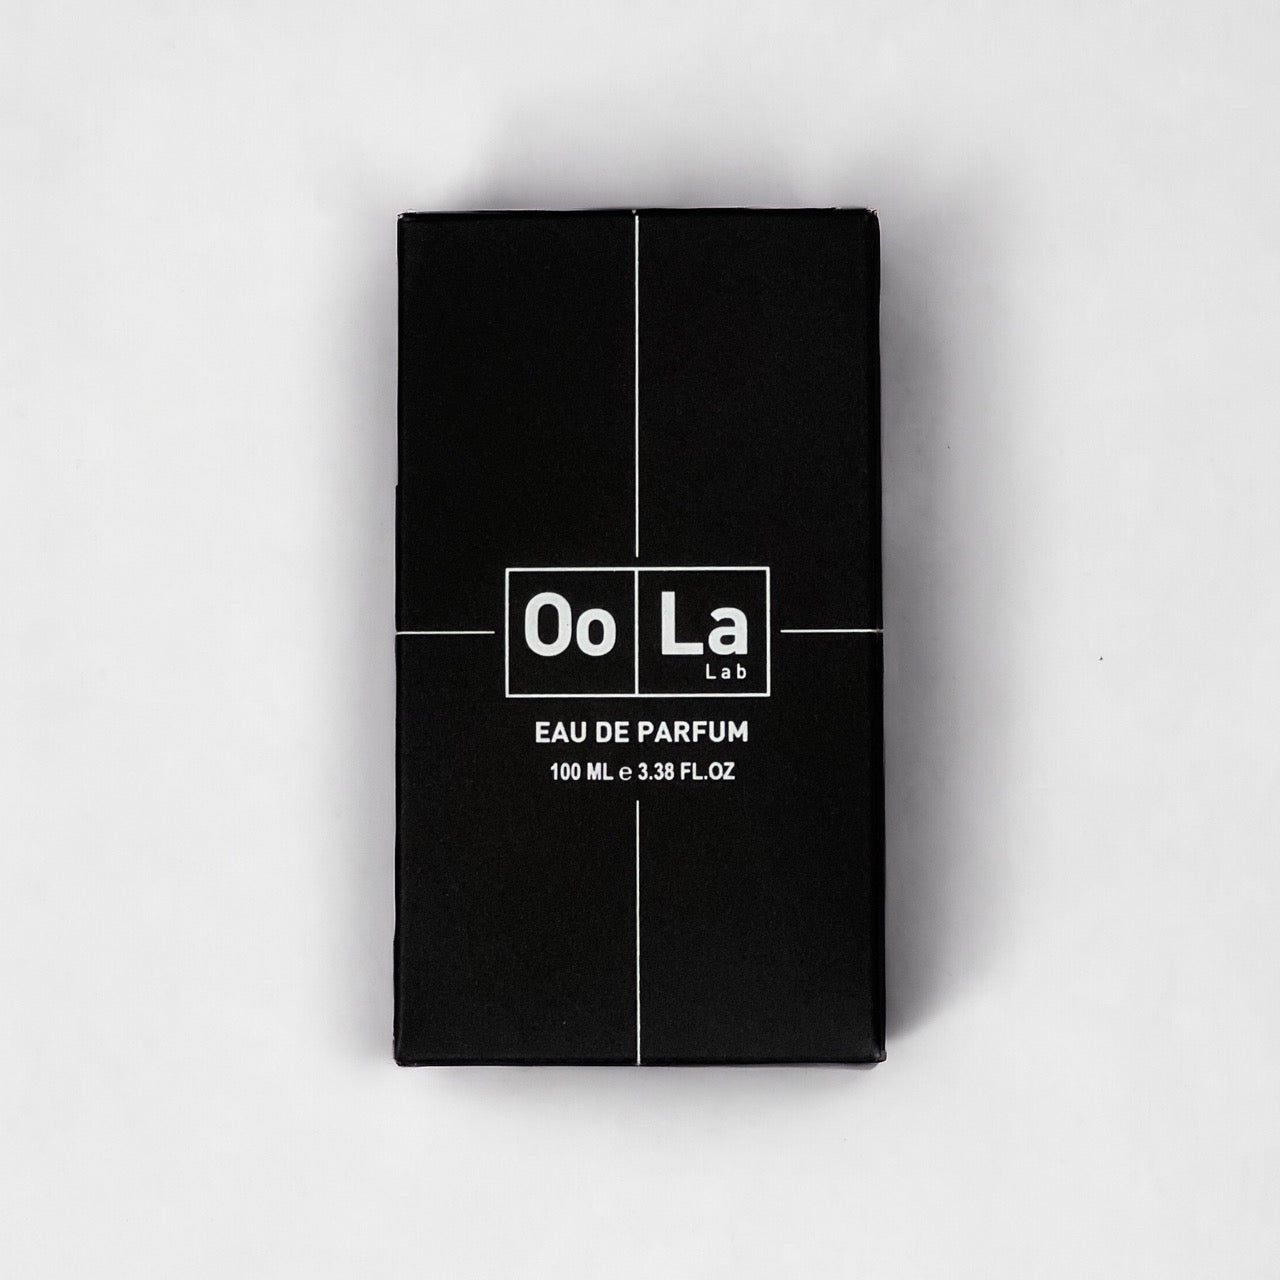 OUD Eau de Parfum (100ml) - Oo La Lab